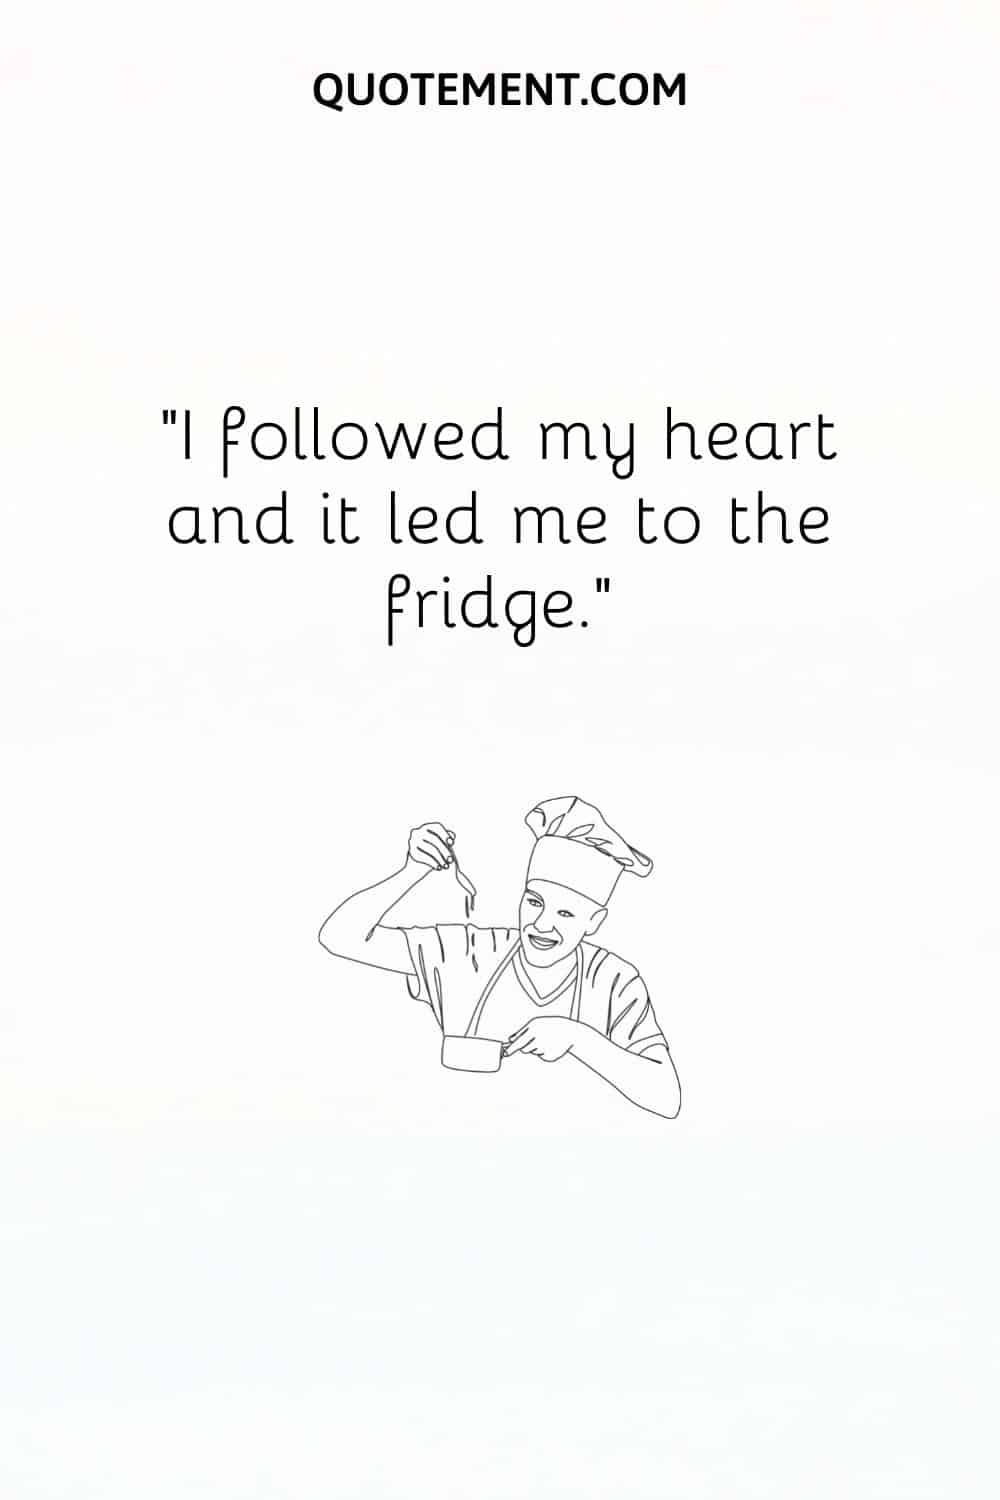 I followed my heart and it led me to the fridge